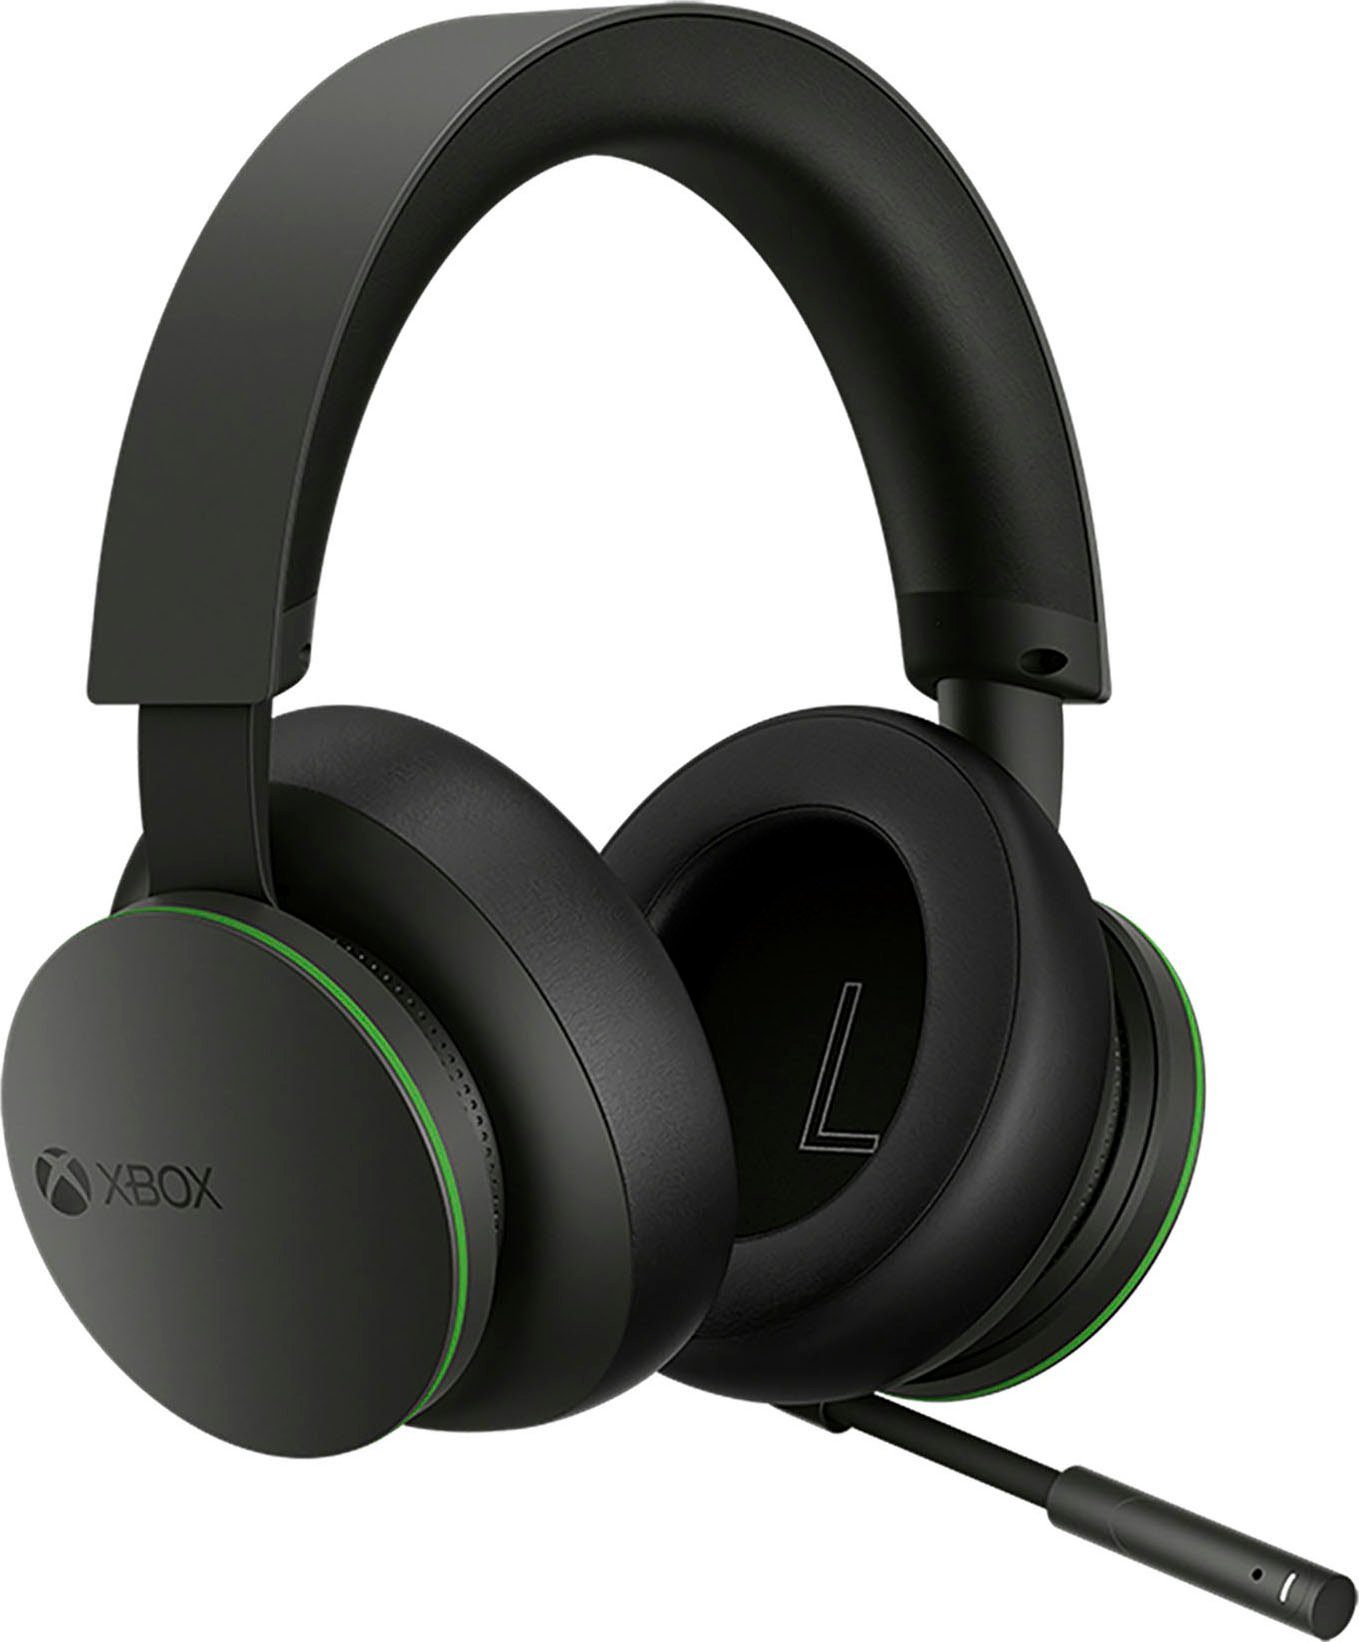 Headset Wireless (Rauschunterdrückung) Xbox